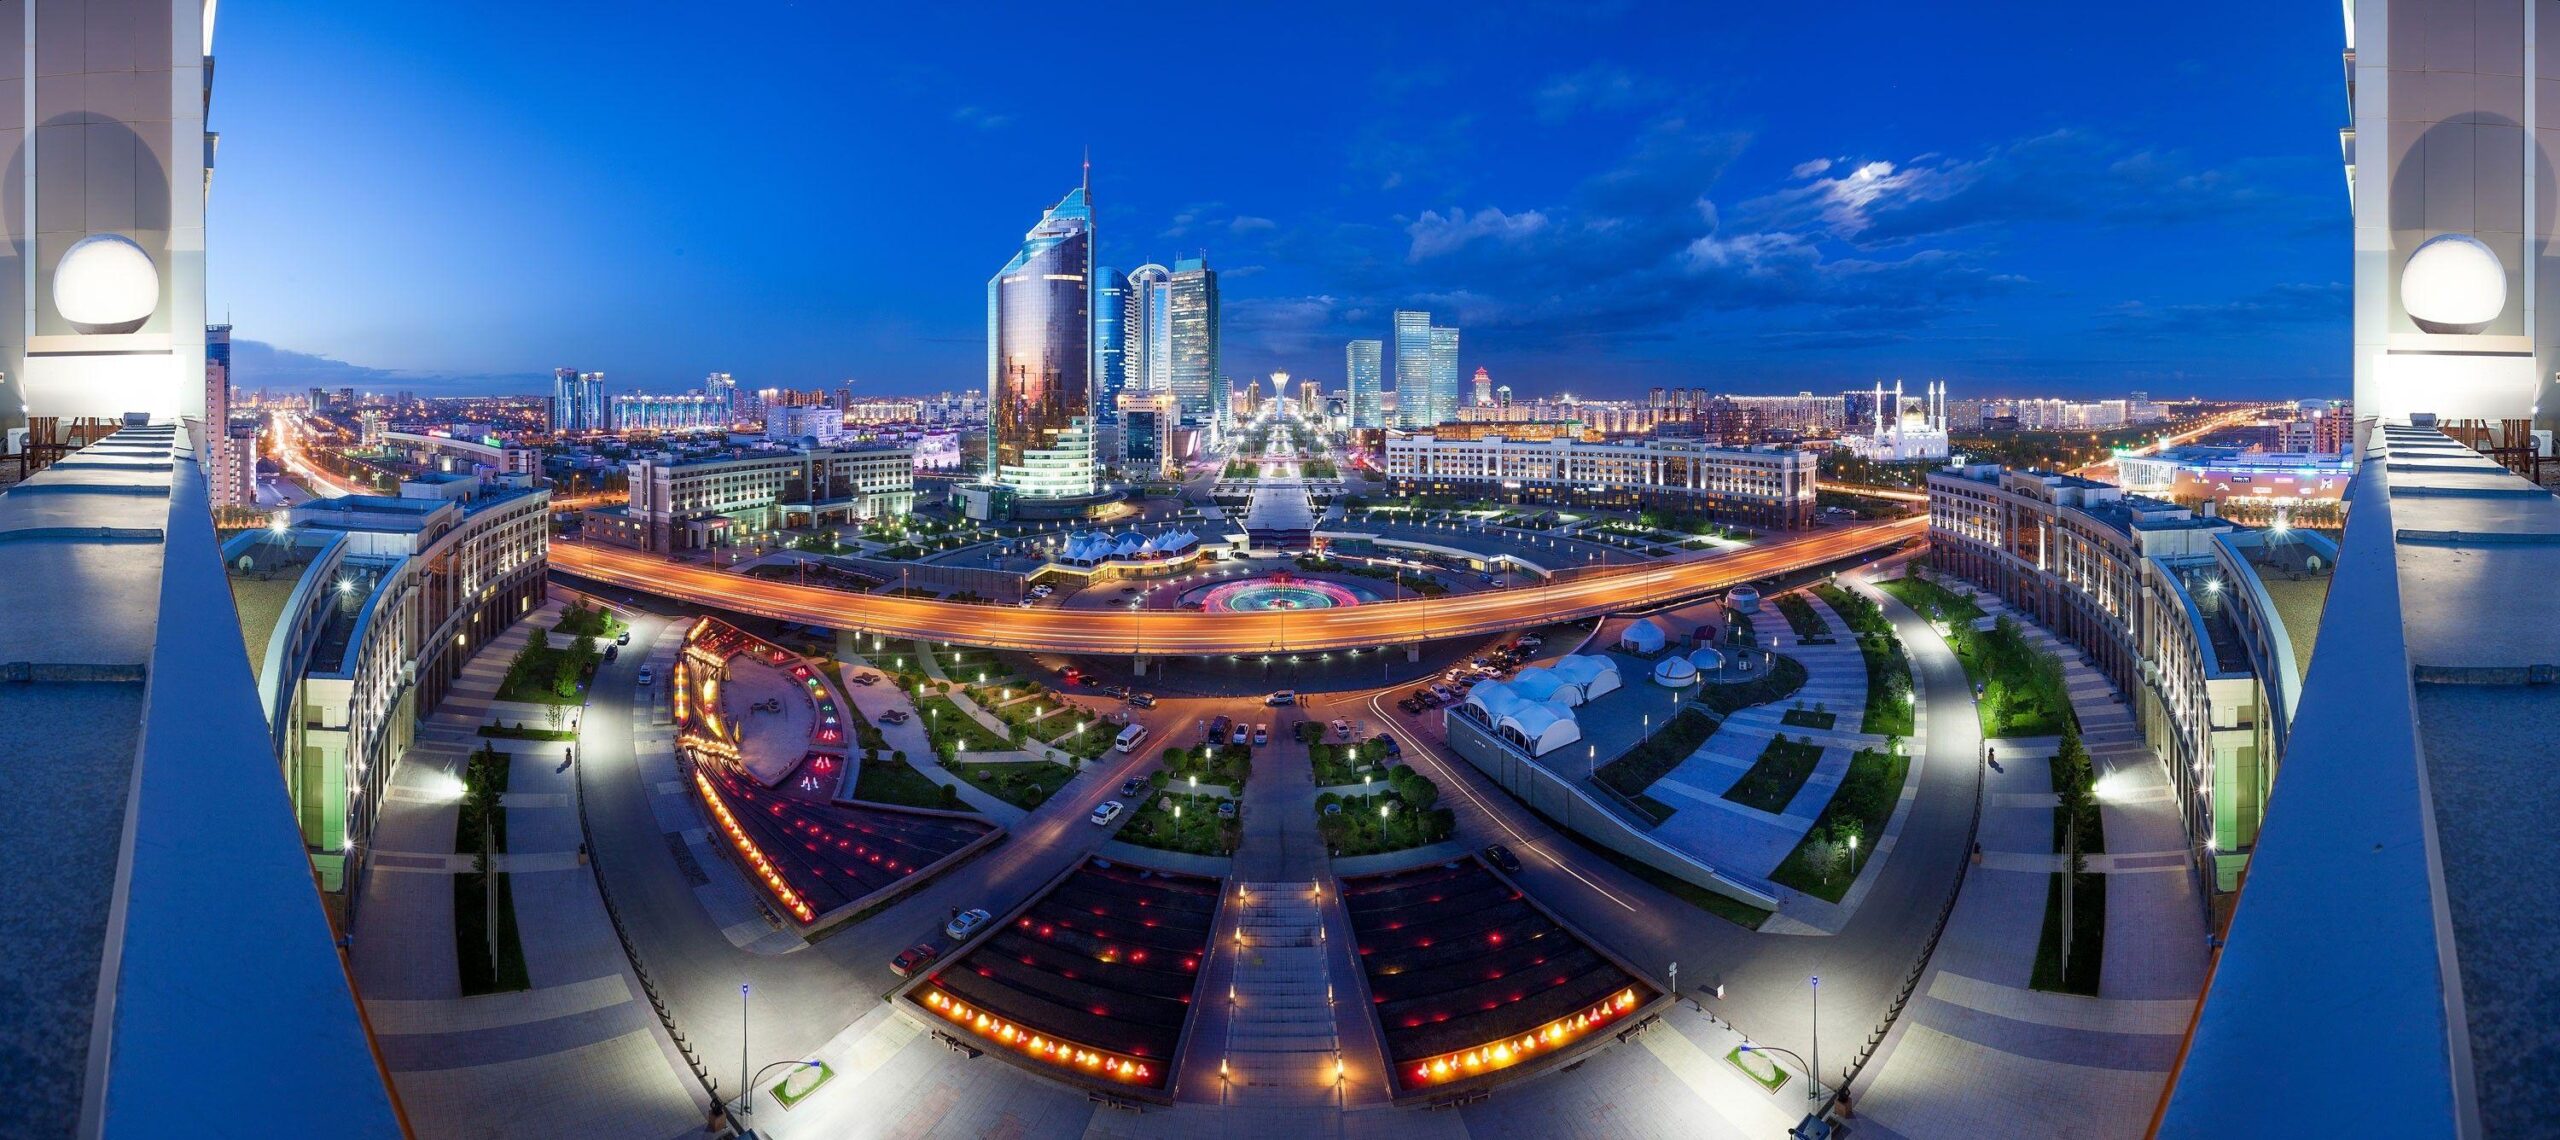 Astana,Kazakhstan 2K Wallpapers